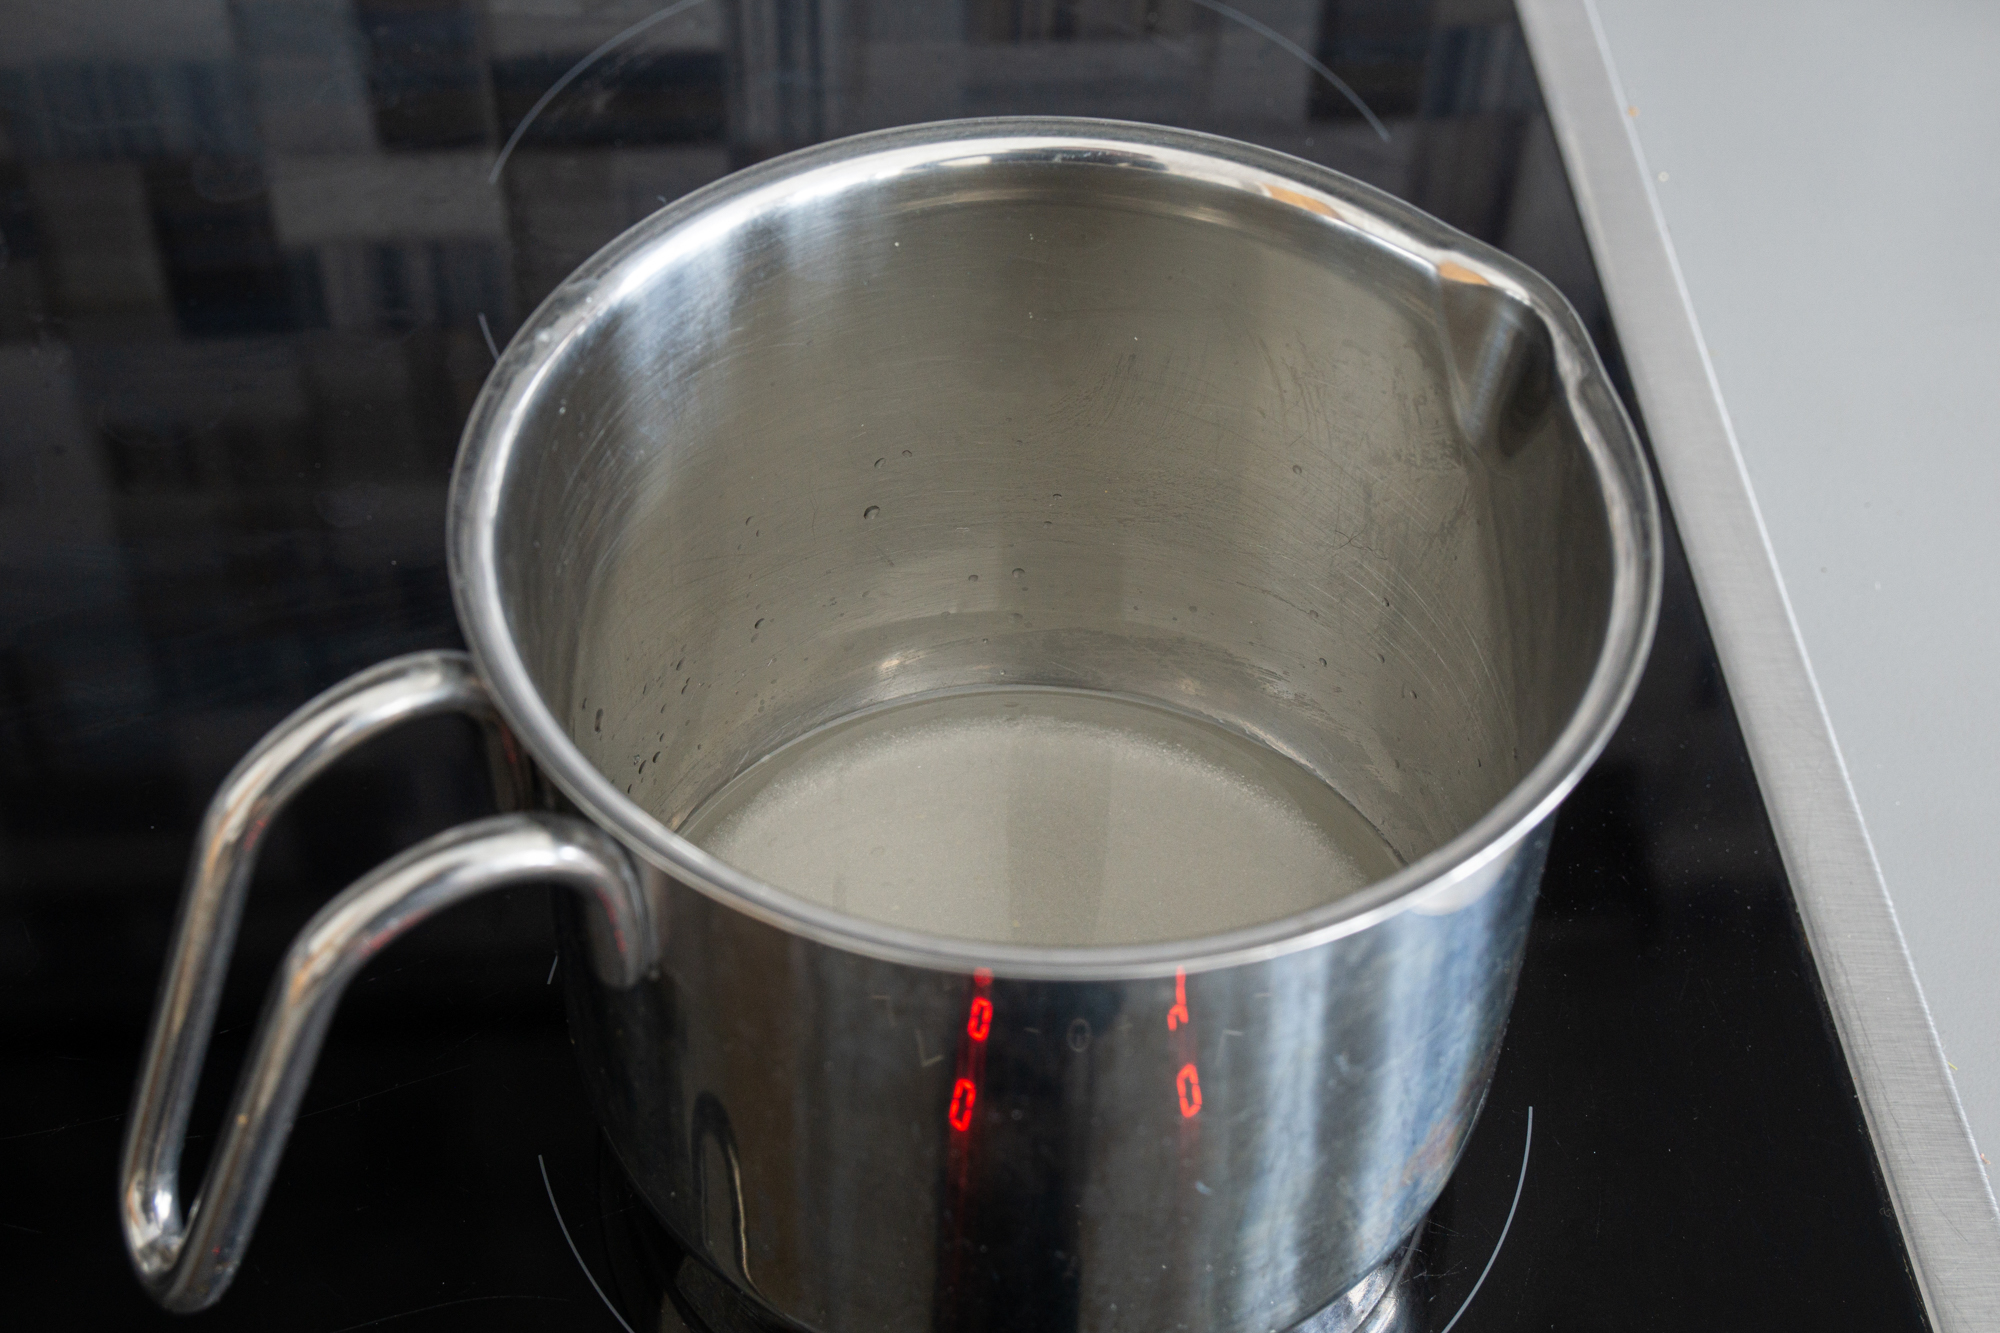 Slowly heating sugar syrup in a saucepan, till the sugar dissolves